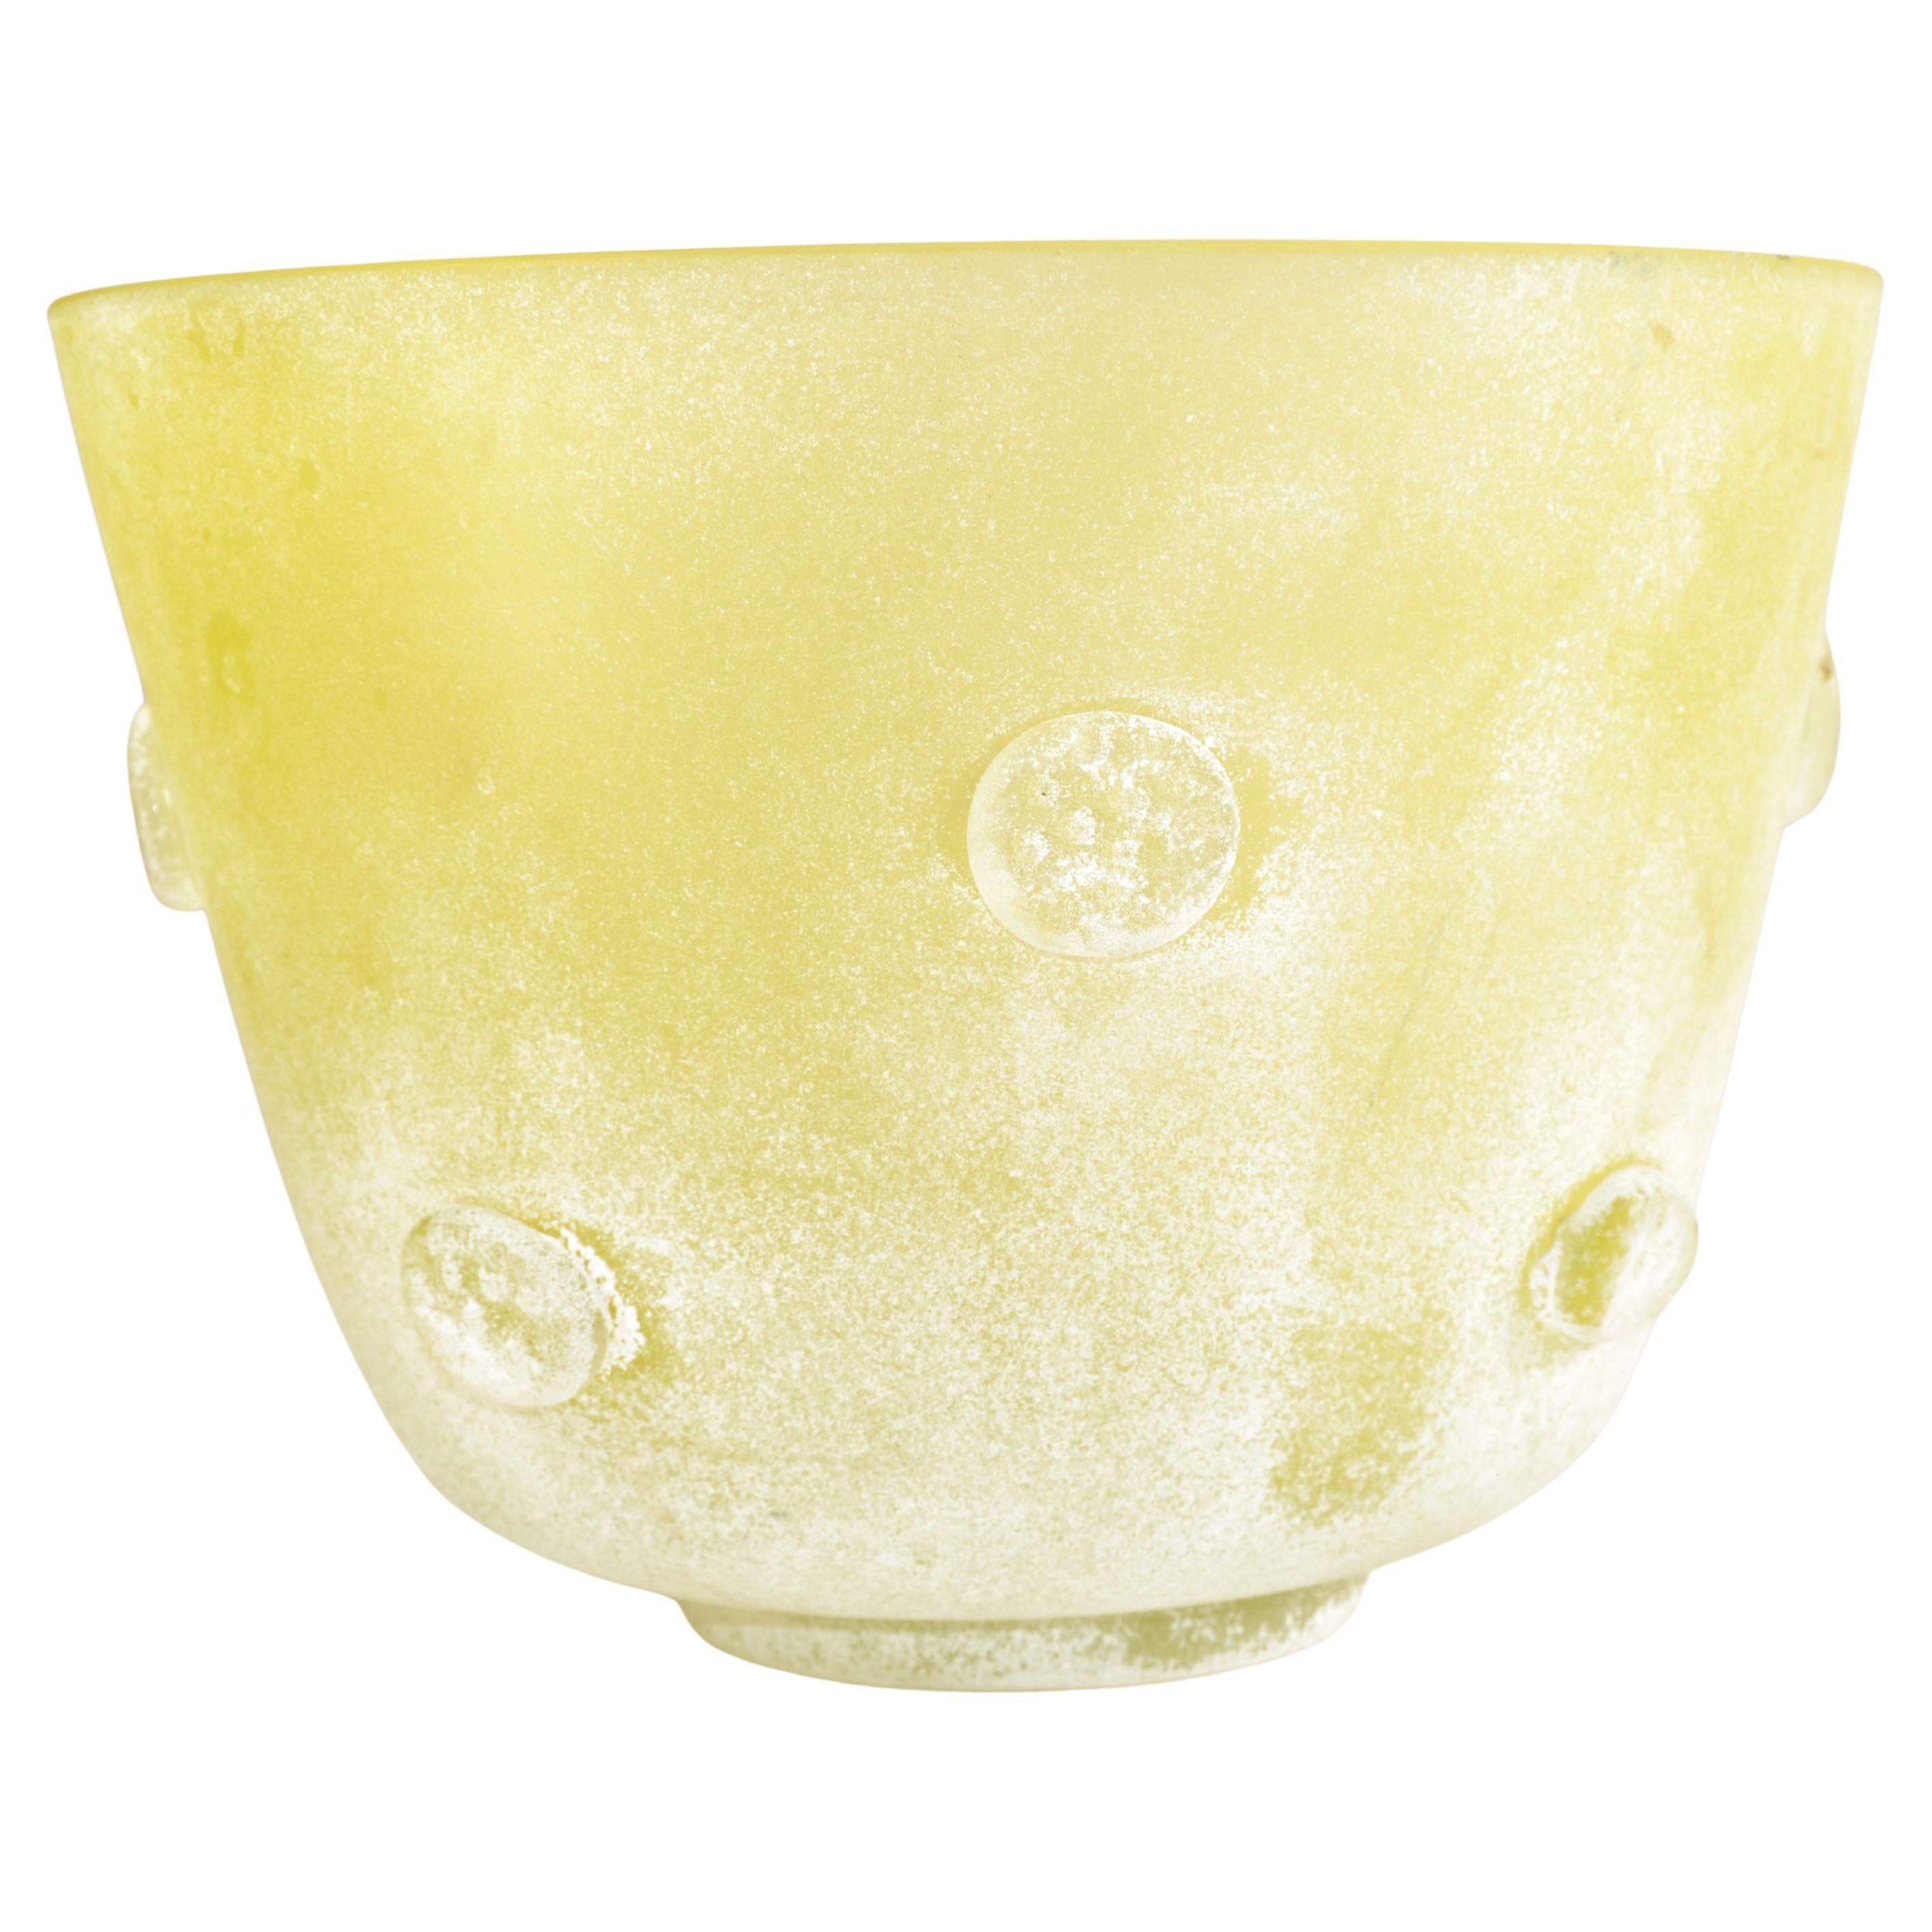 1970 Archimede Seguso Scavo Yellow Frosted Bowl Italy White Seguso Vetri d'Arte For Sale